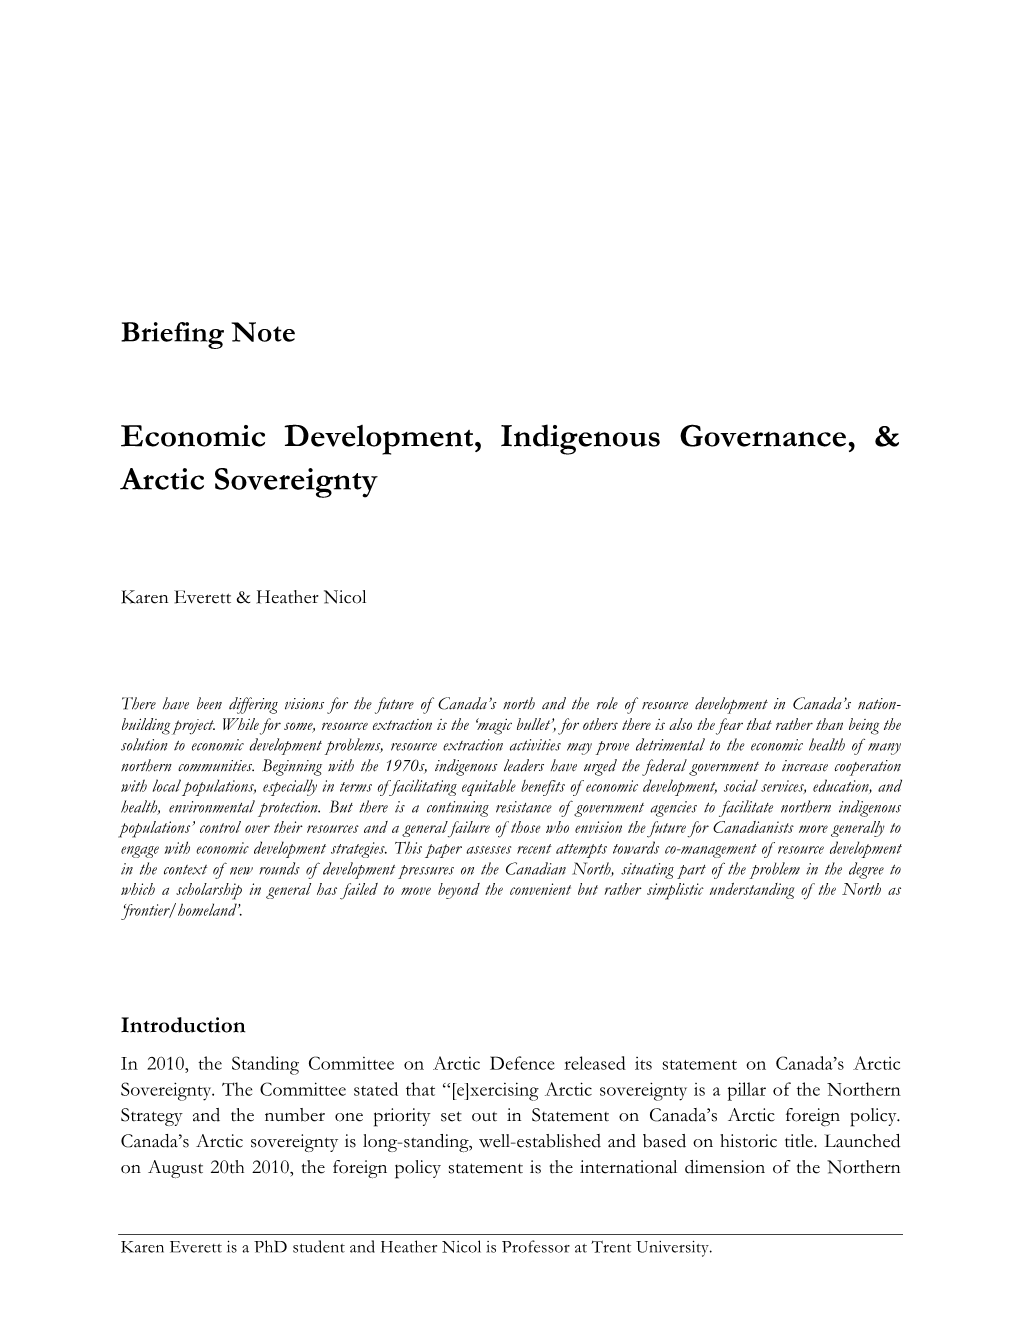 Economic Development, Indigenous Governance, & Arctic Sovereignty